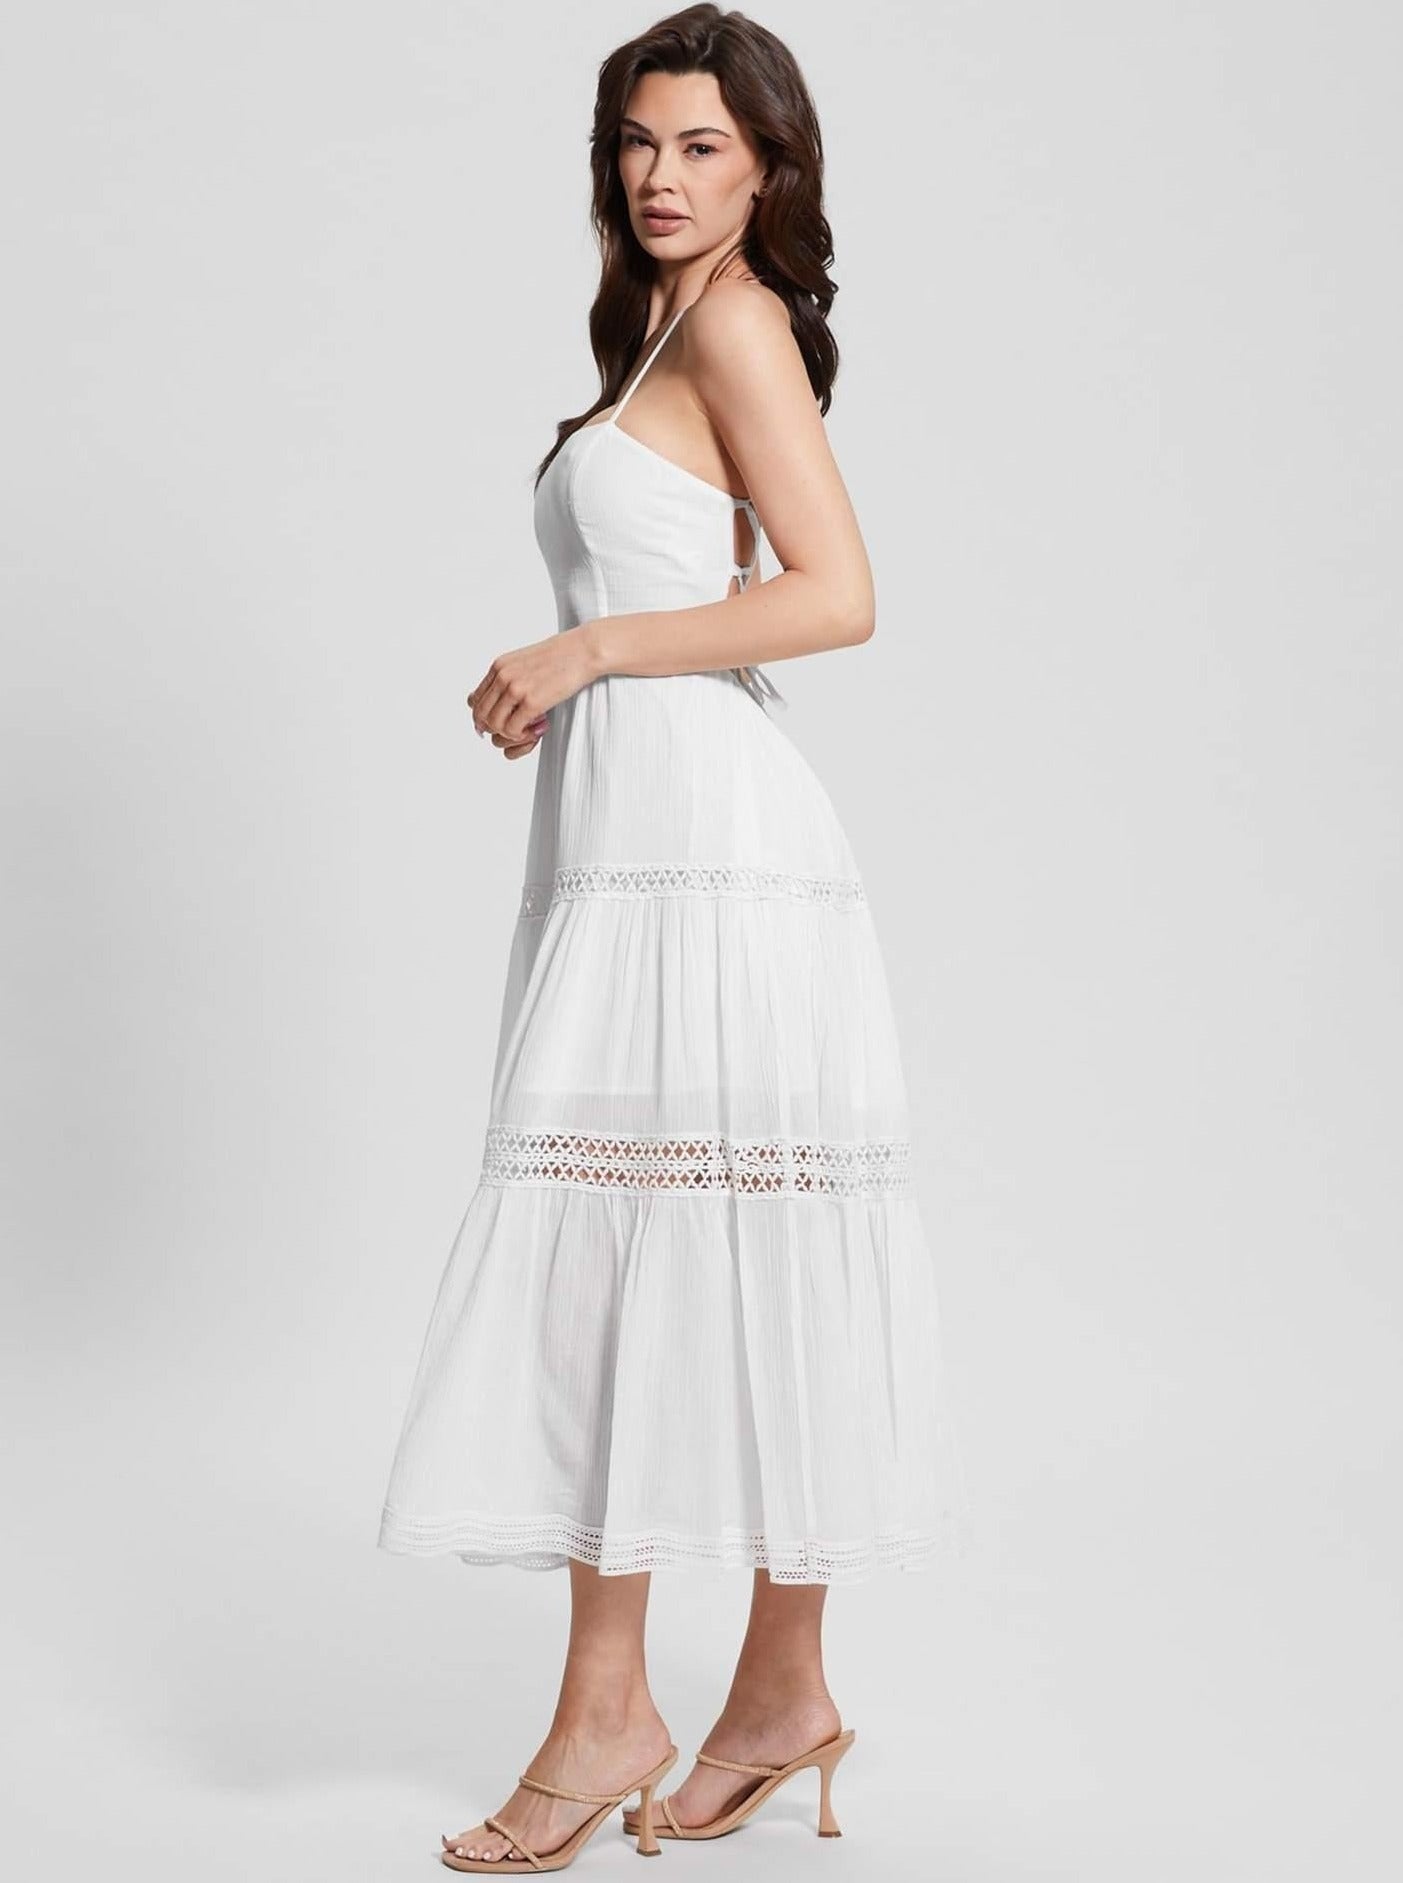 Weißes elegantes ärmelloses rückenfreies langes Kleid